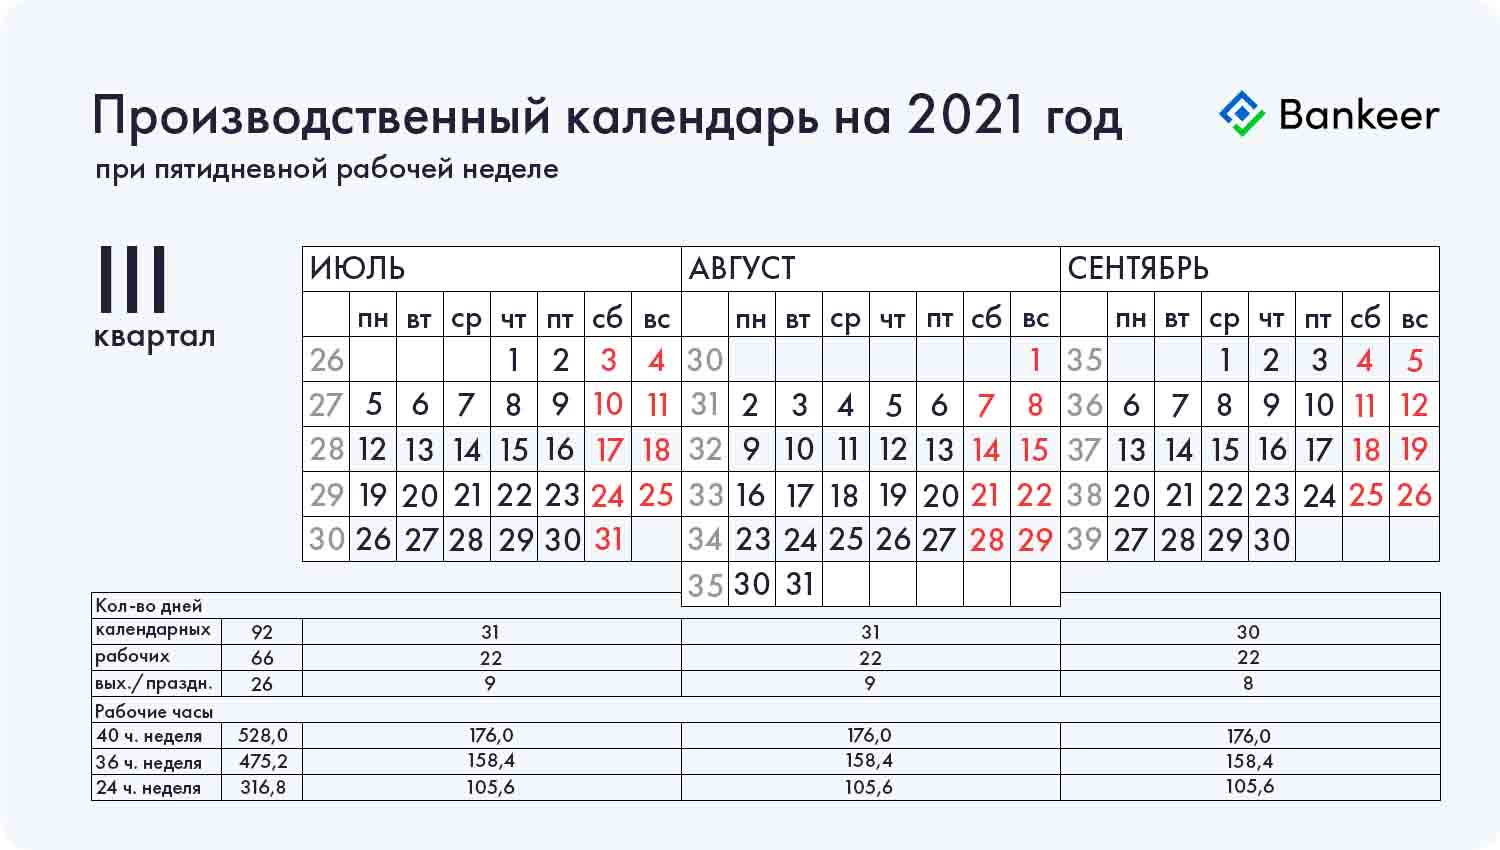 Производственный календарь на 2021 год 3 (III) квартал